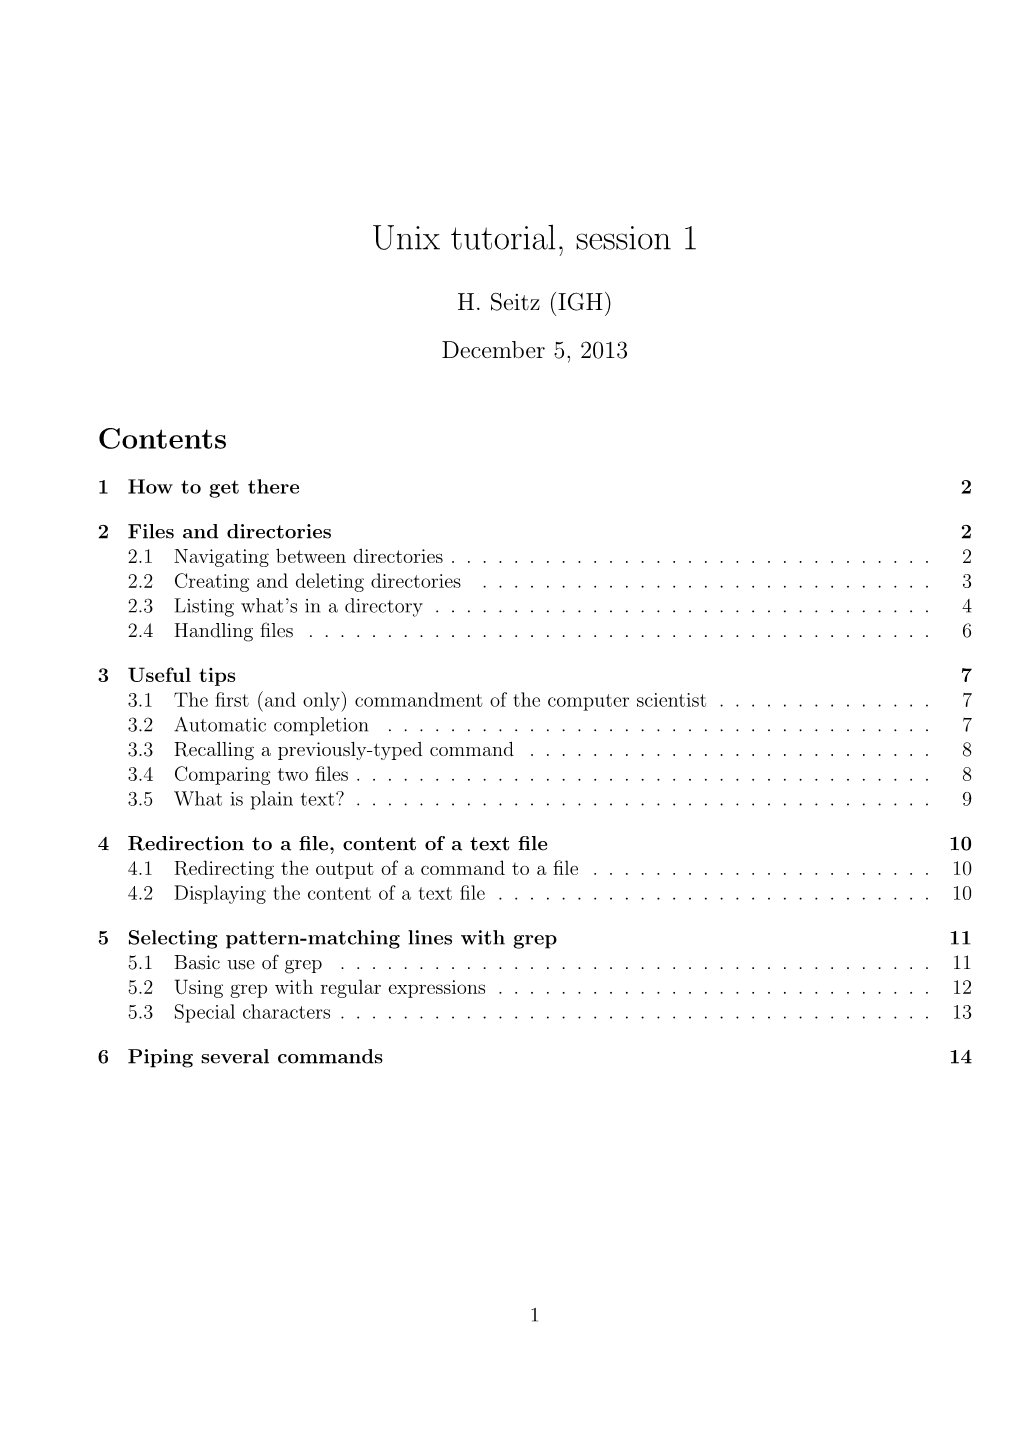 Unix Tutorial, Session 1